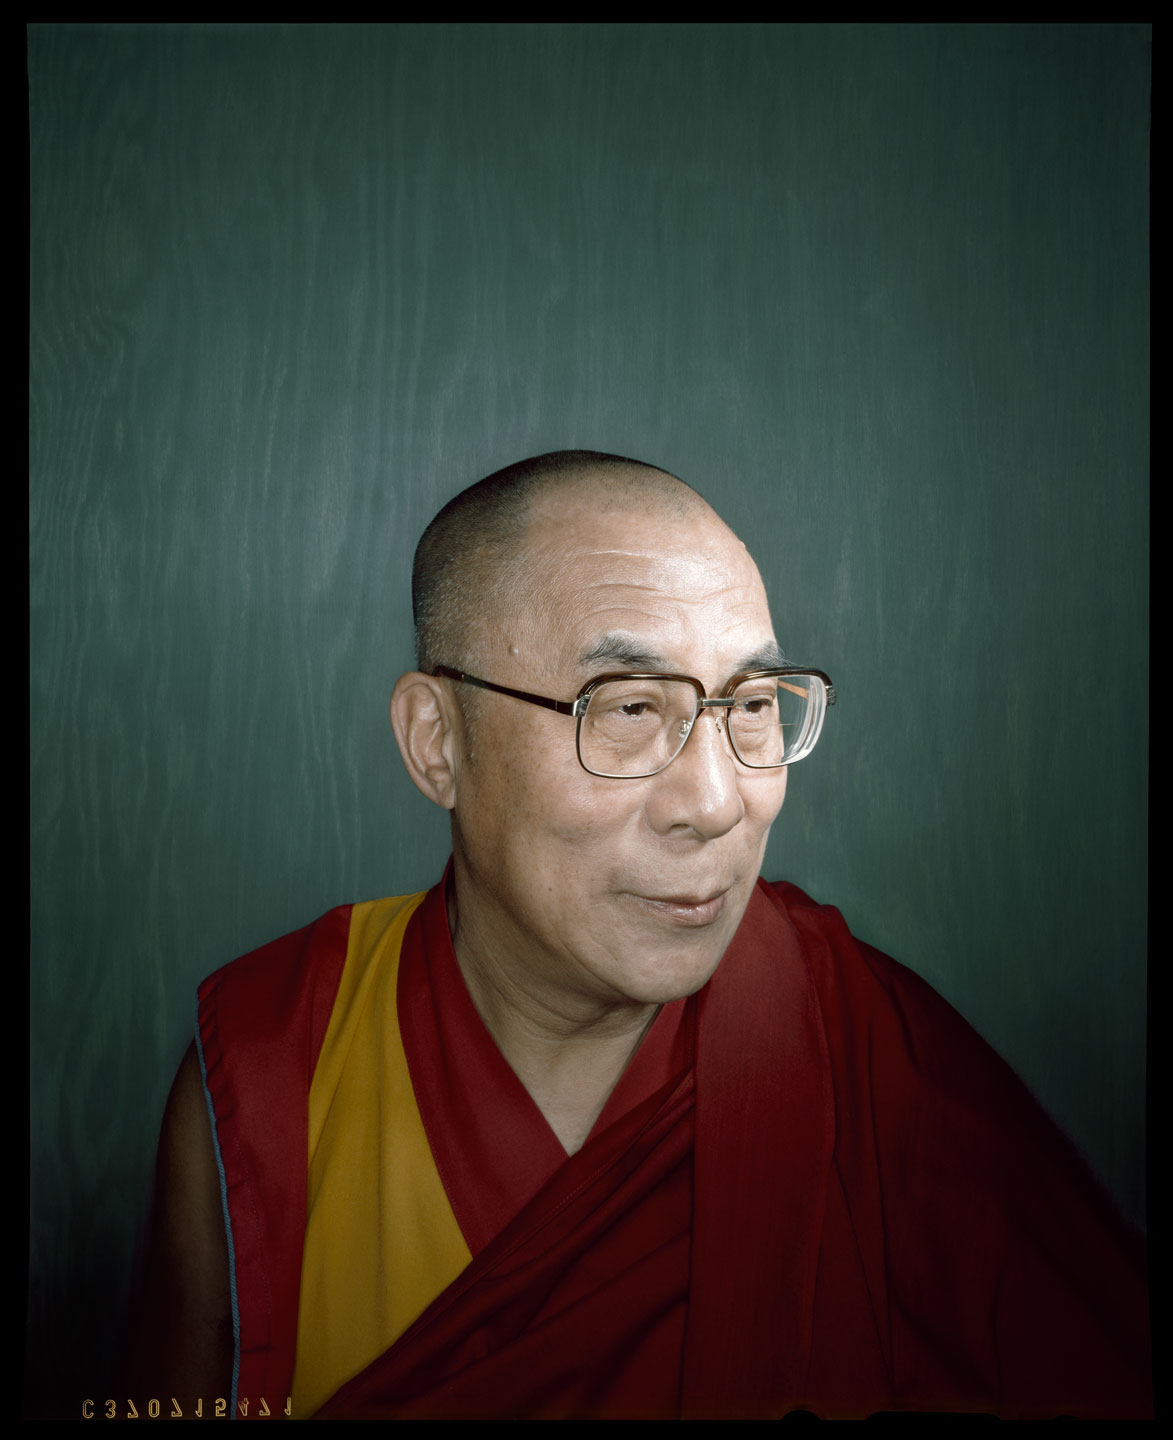 His Holiness the 14th Dalai Lama - Tuscon, AZ - New York Times Magazine